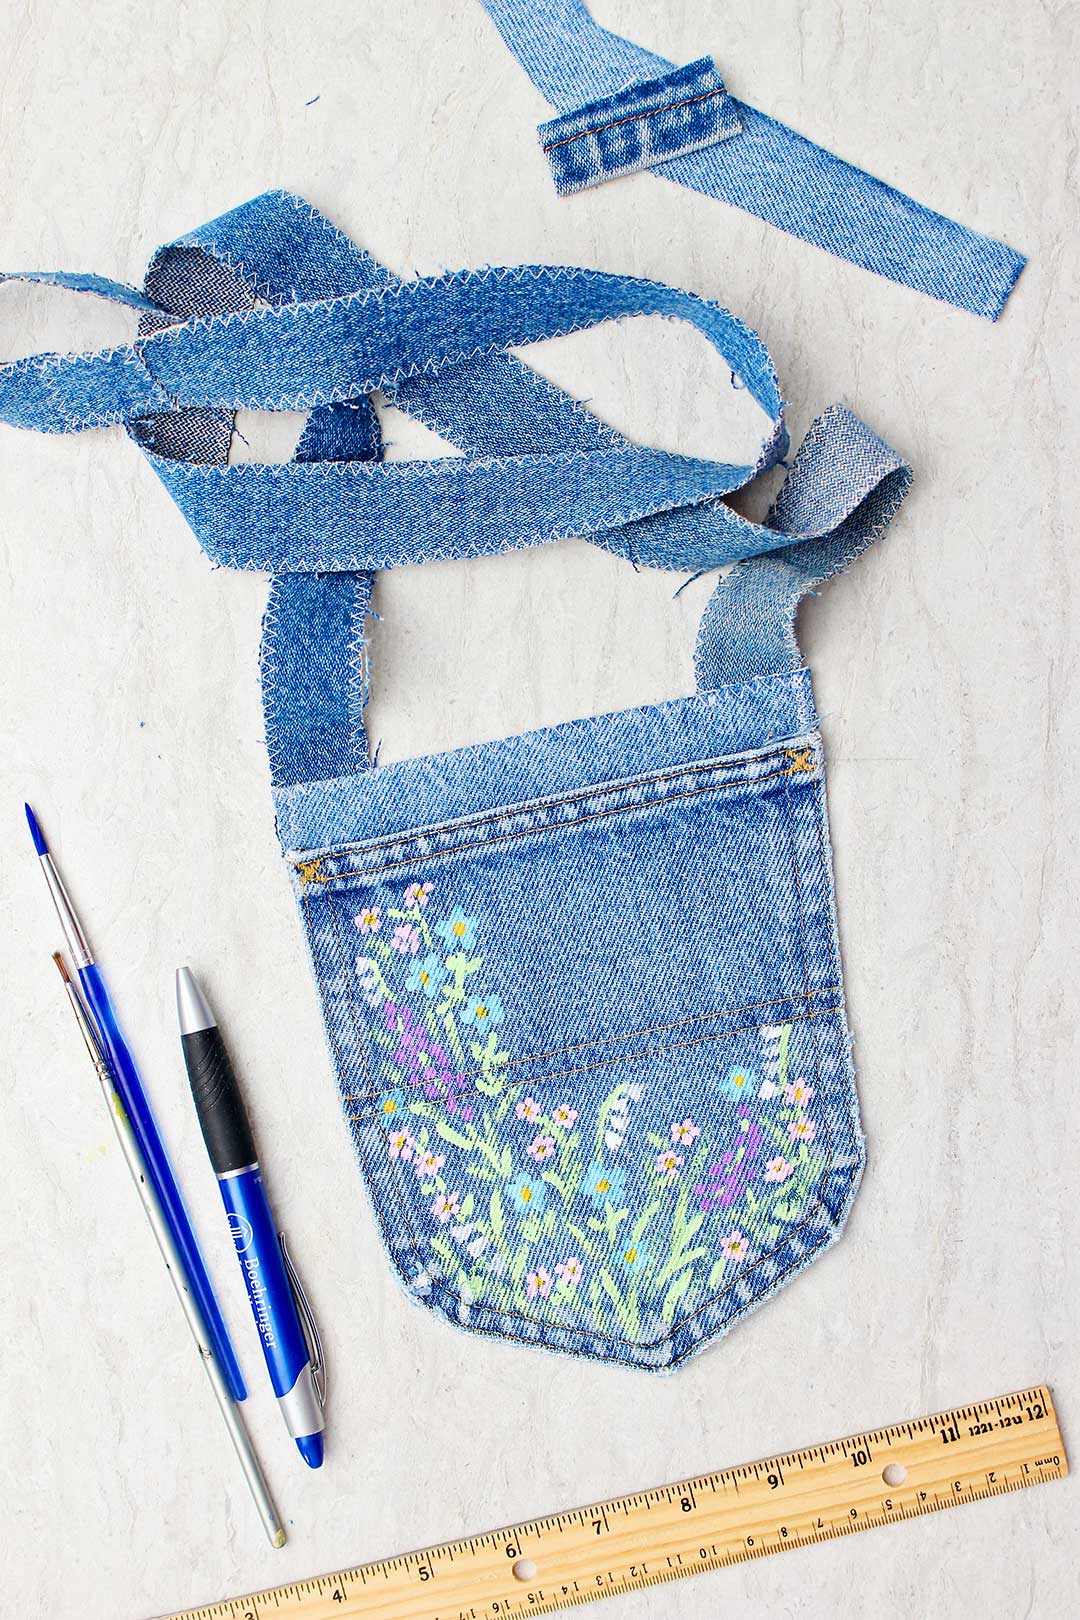 Used denim handbag / Denim patchwork bag / Jeans patchwork tote / Vintage  jeans bag / Patched blue jeans bag / Boro bag / Recycled denim bag - Etsy  日本 | Patchwork bags, Denim handbags, Recycled denim